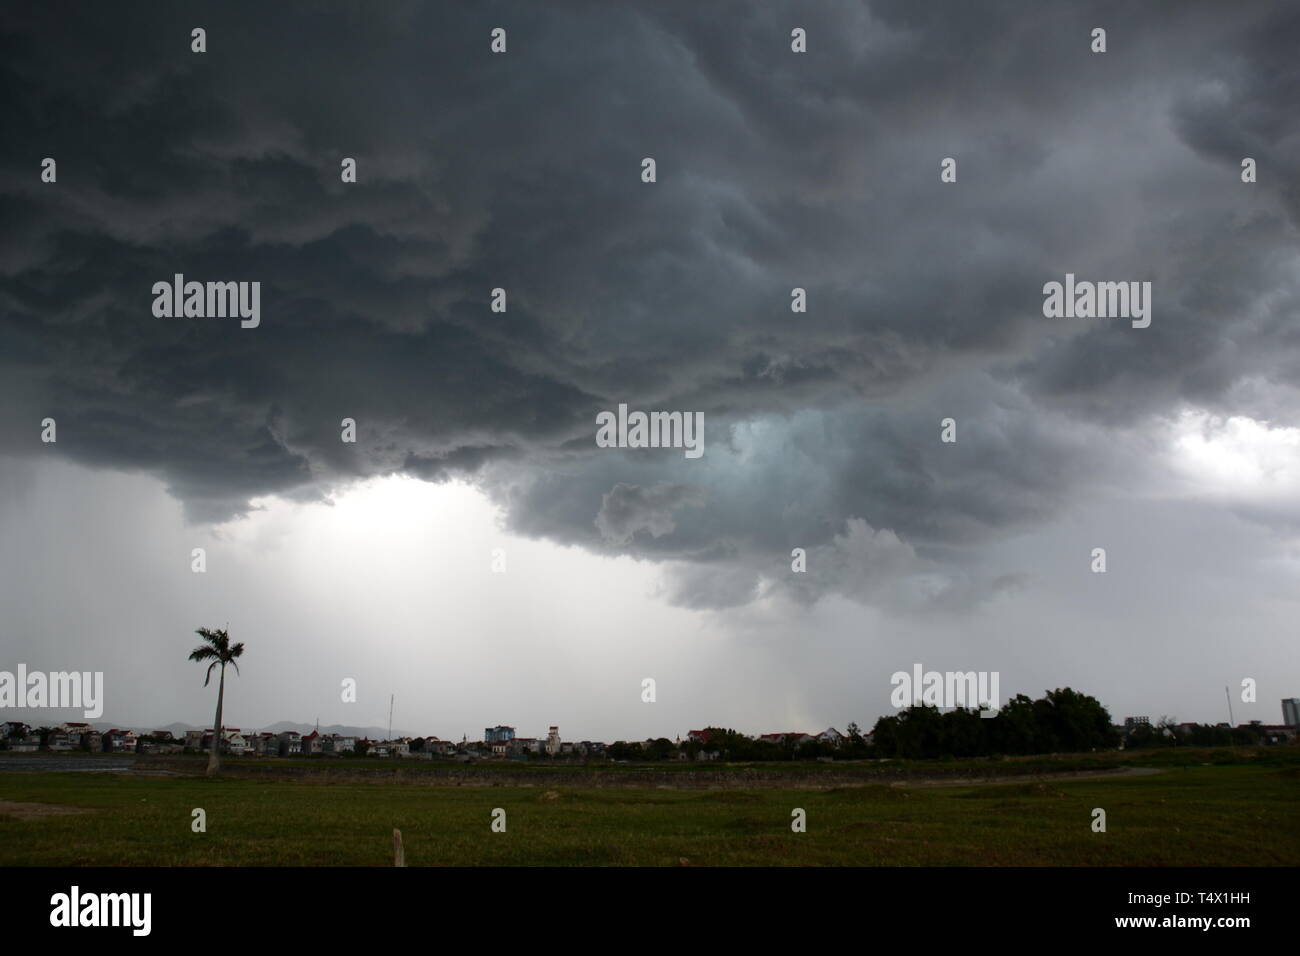 Dark storm clouds over Ha Tinh, Vietnam, as a lightning storm approaches Stock Photo